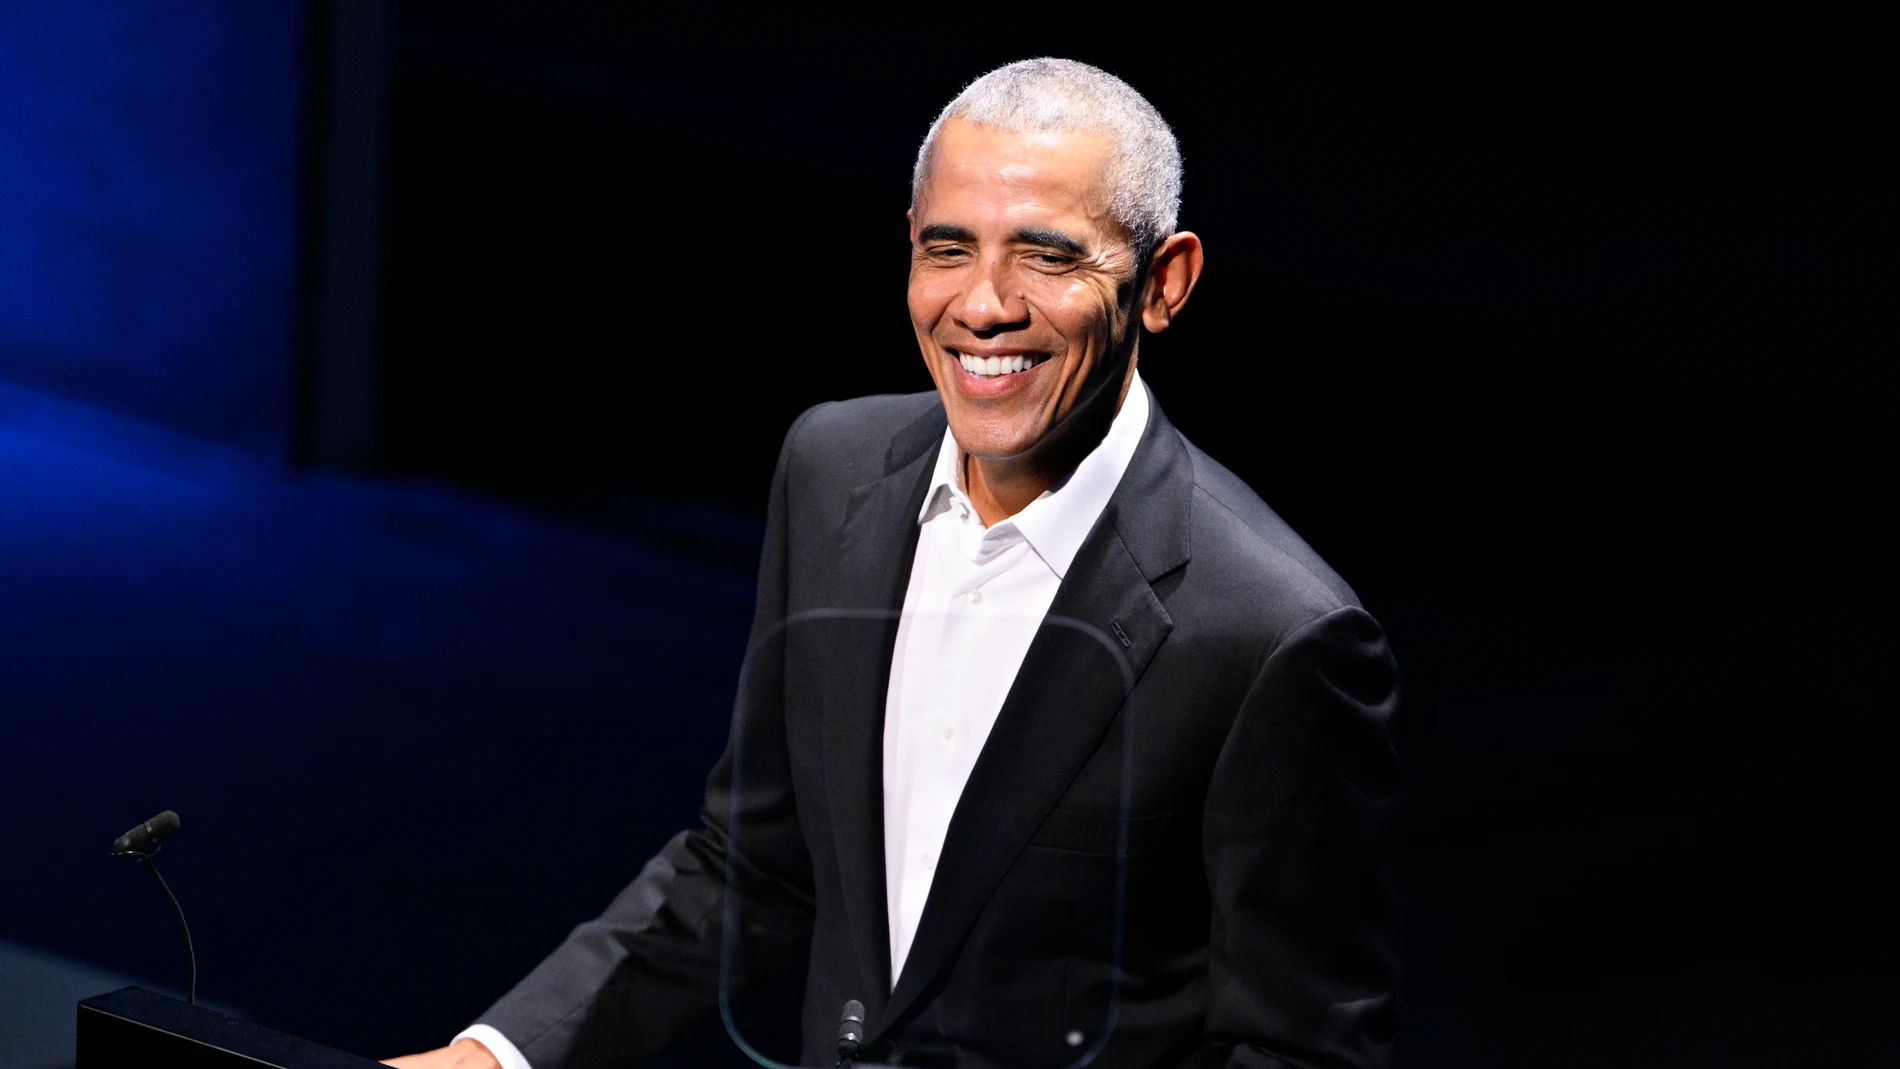 El expresidente de Estados Unidos, Barack Obama